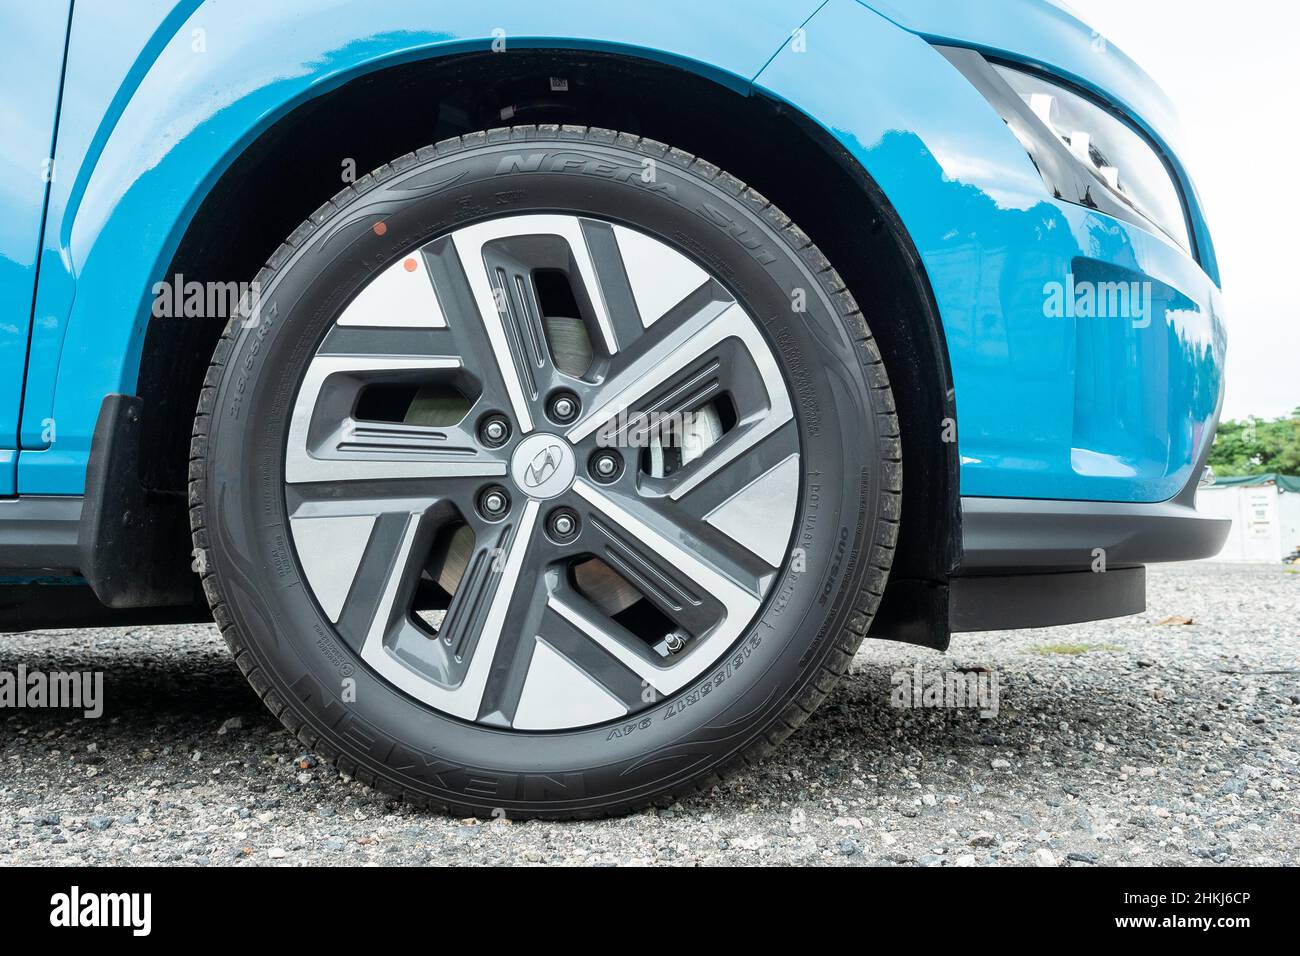 Hyundai kona hi-res stock photography and images - Alamy